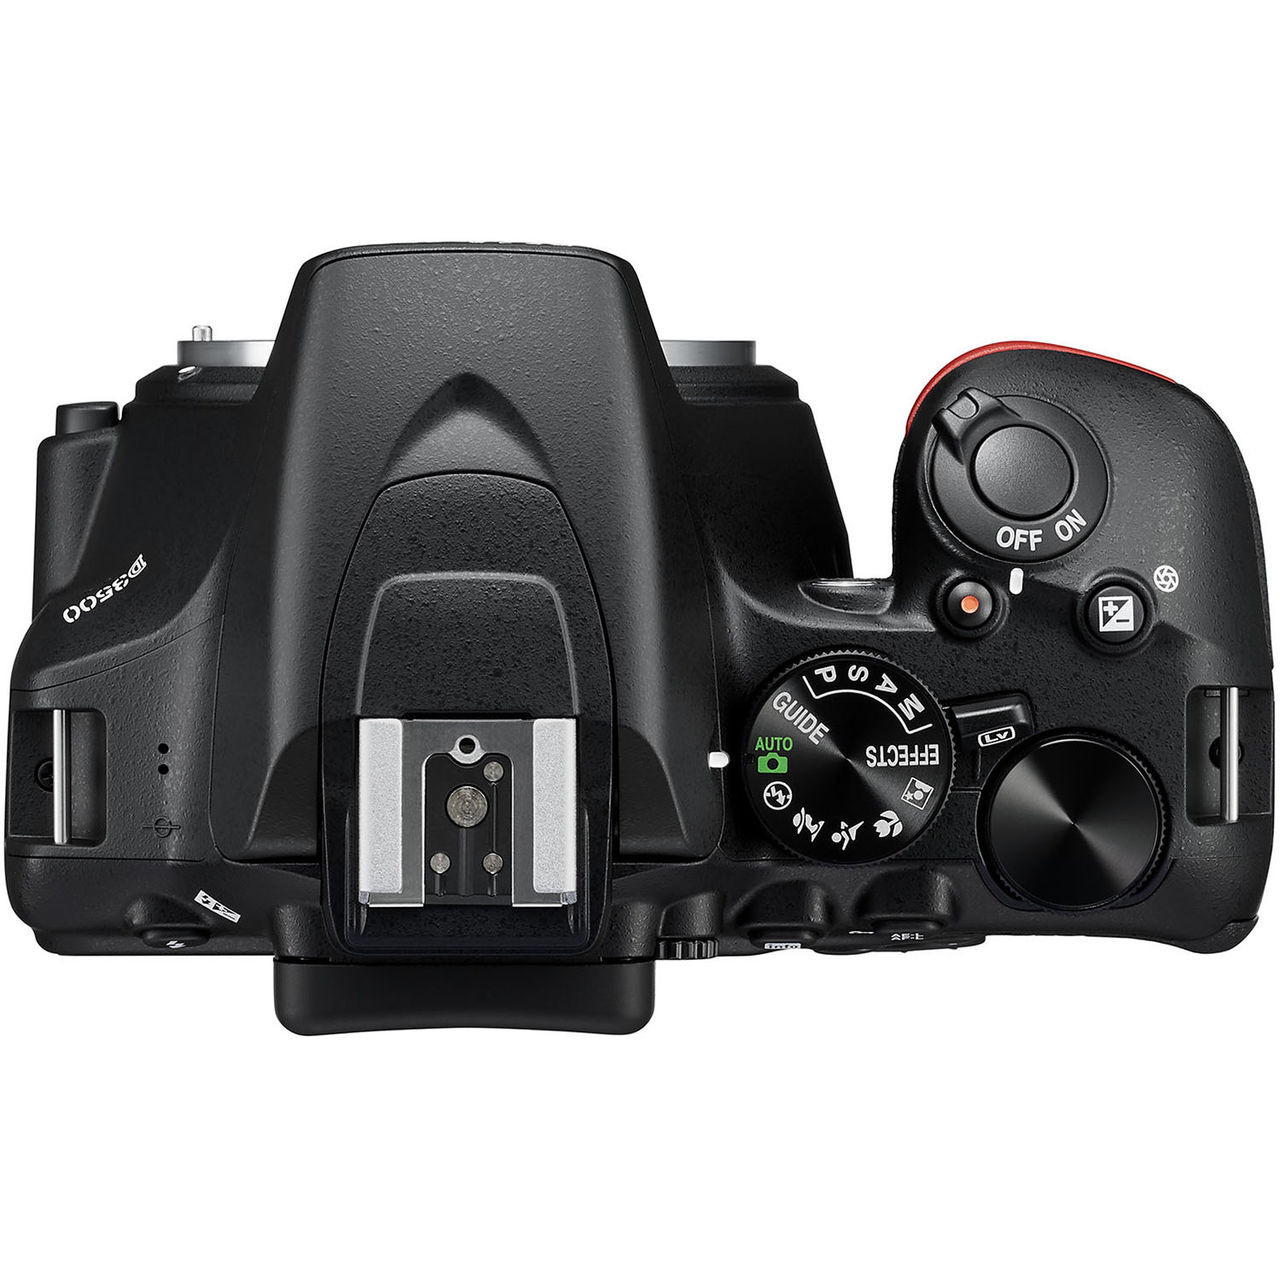 Nikon D3500 DSLR Camera with 18-55mm and 70-300mm Lenses - Black for sale  online